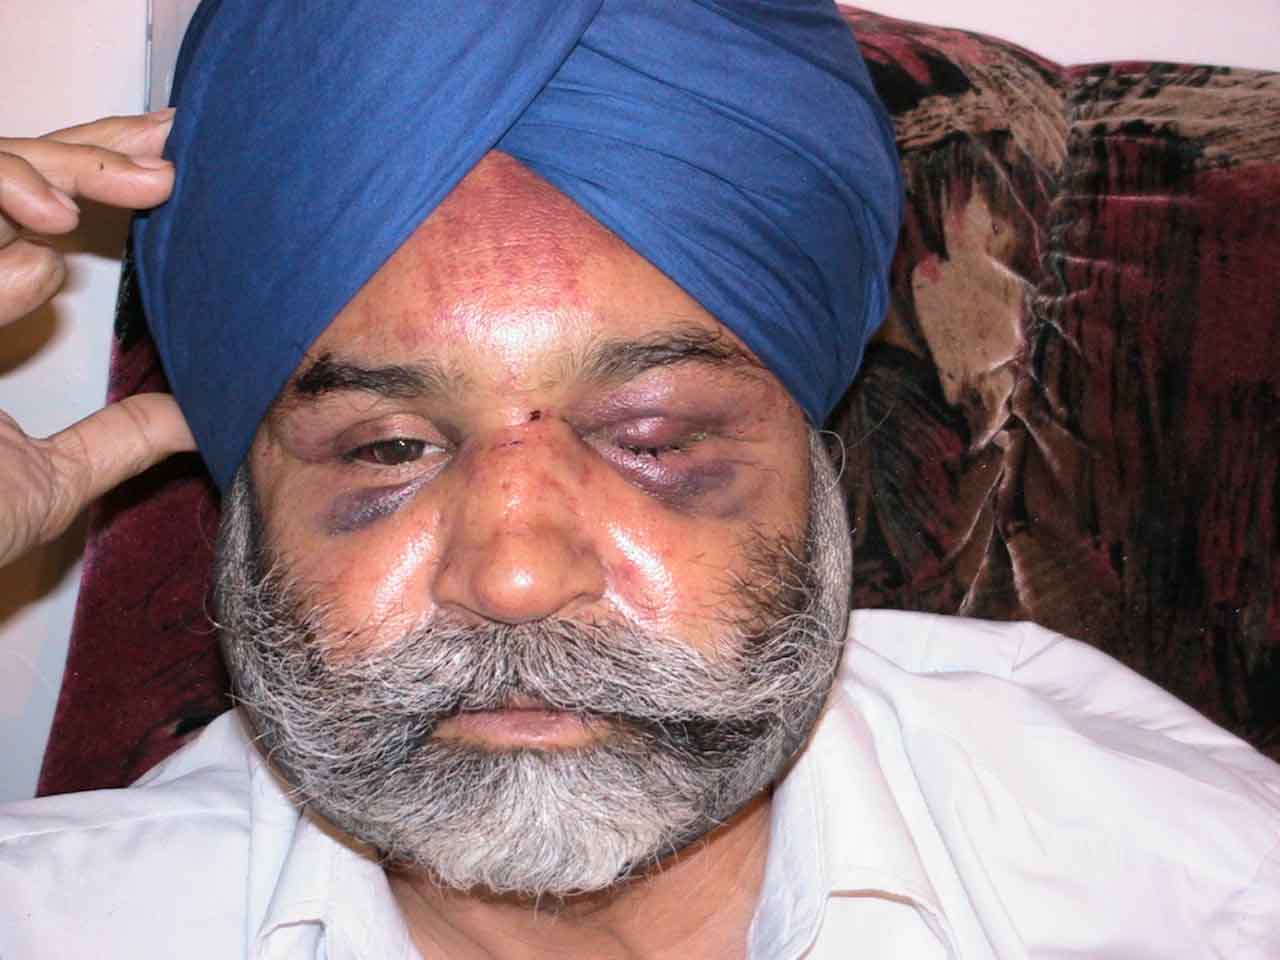 Rajinder Singh Khalsa After the Attack